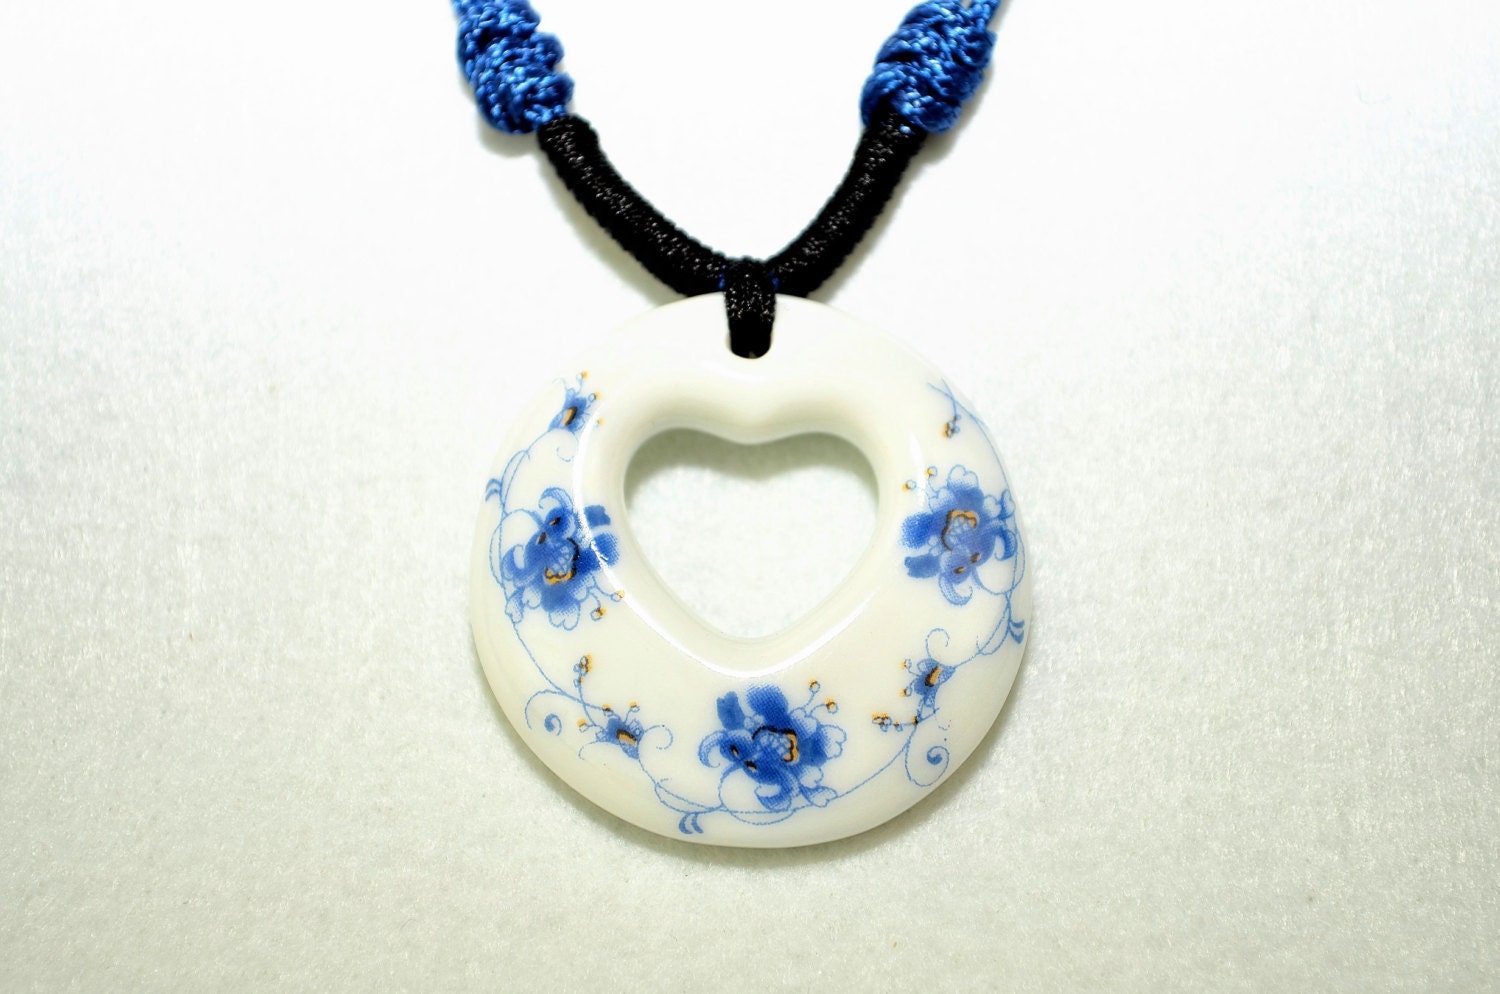 Ceramic jewelry white porcelain pendant necklace heart broken china necklace oriental style flowers pattern - dermusensohn2000